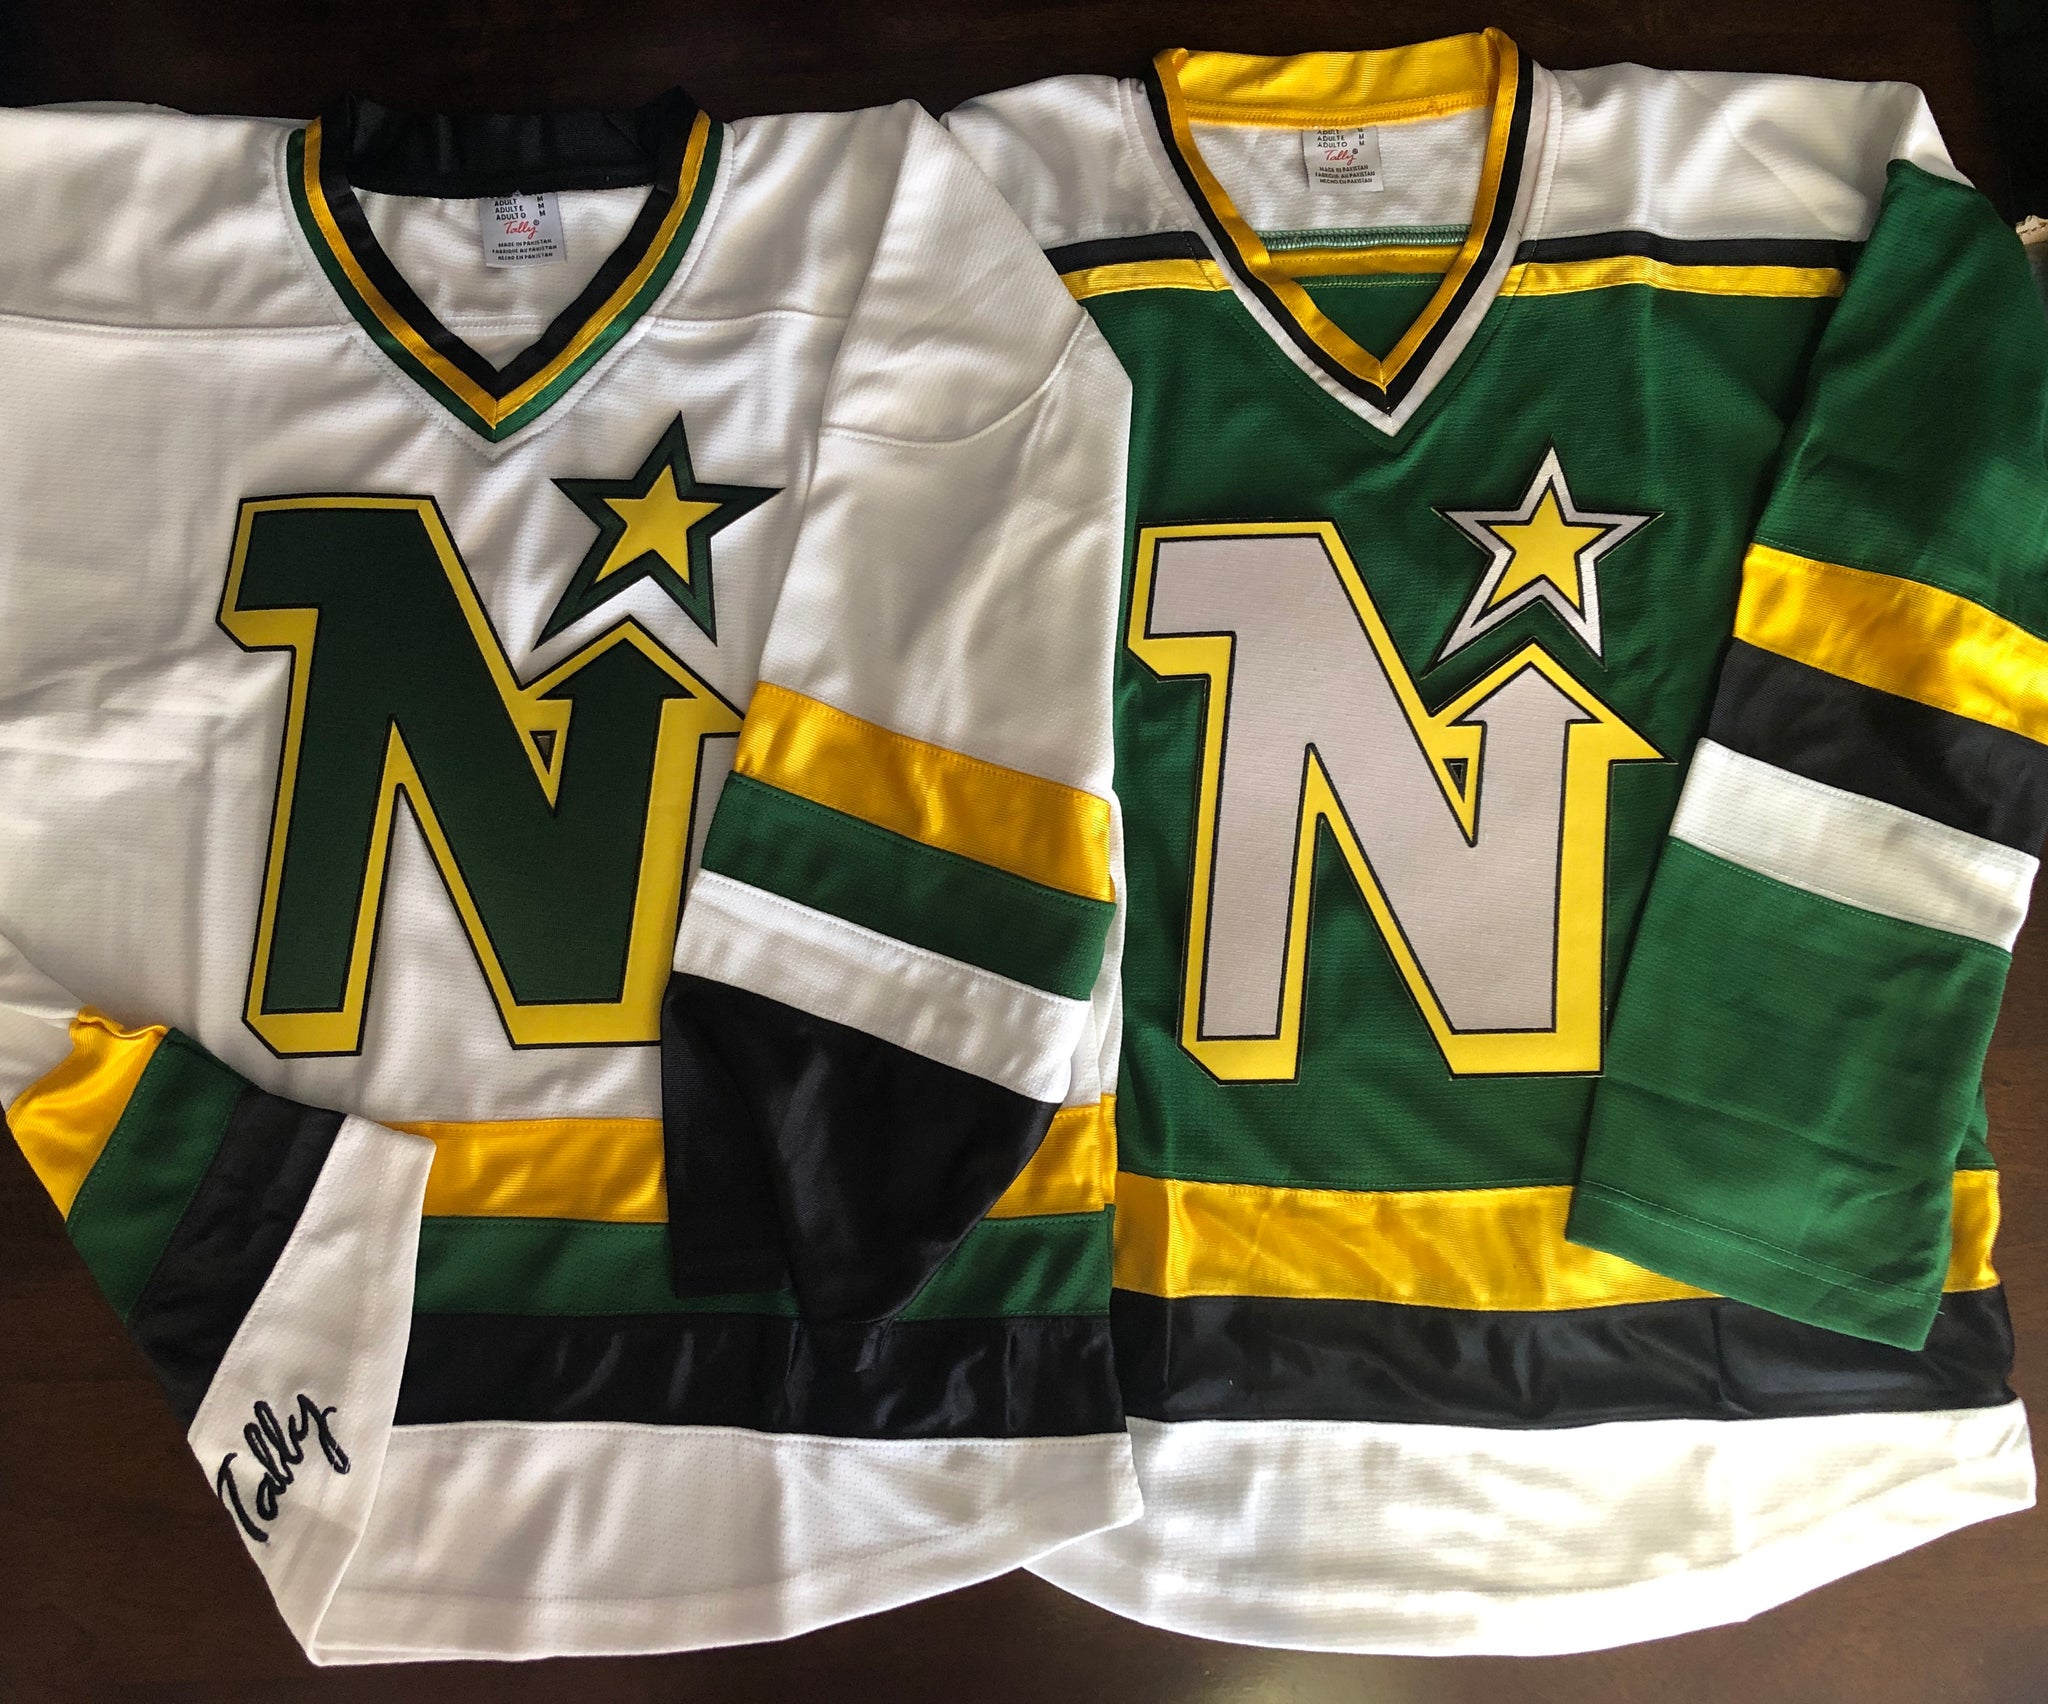 Huf Star Green & White Hockey Jersey